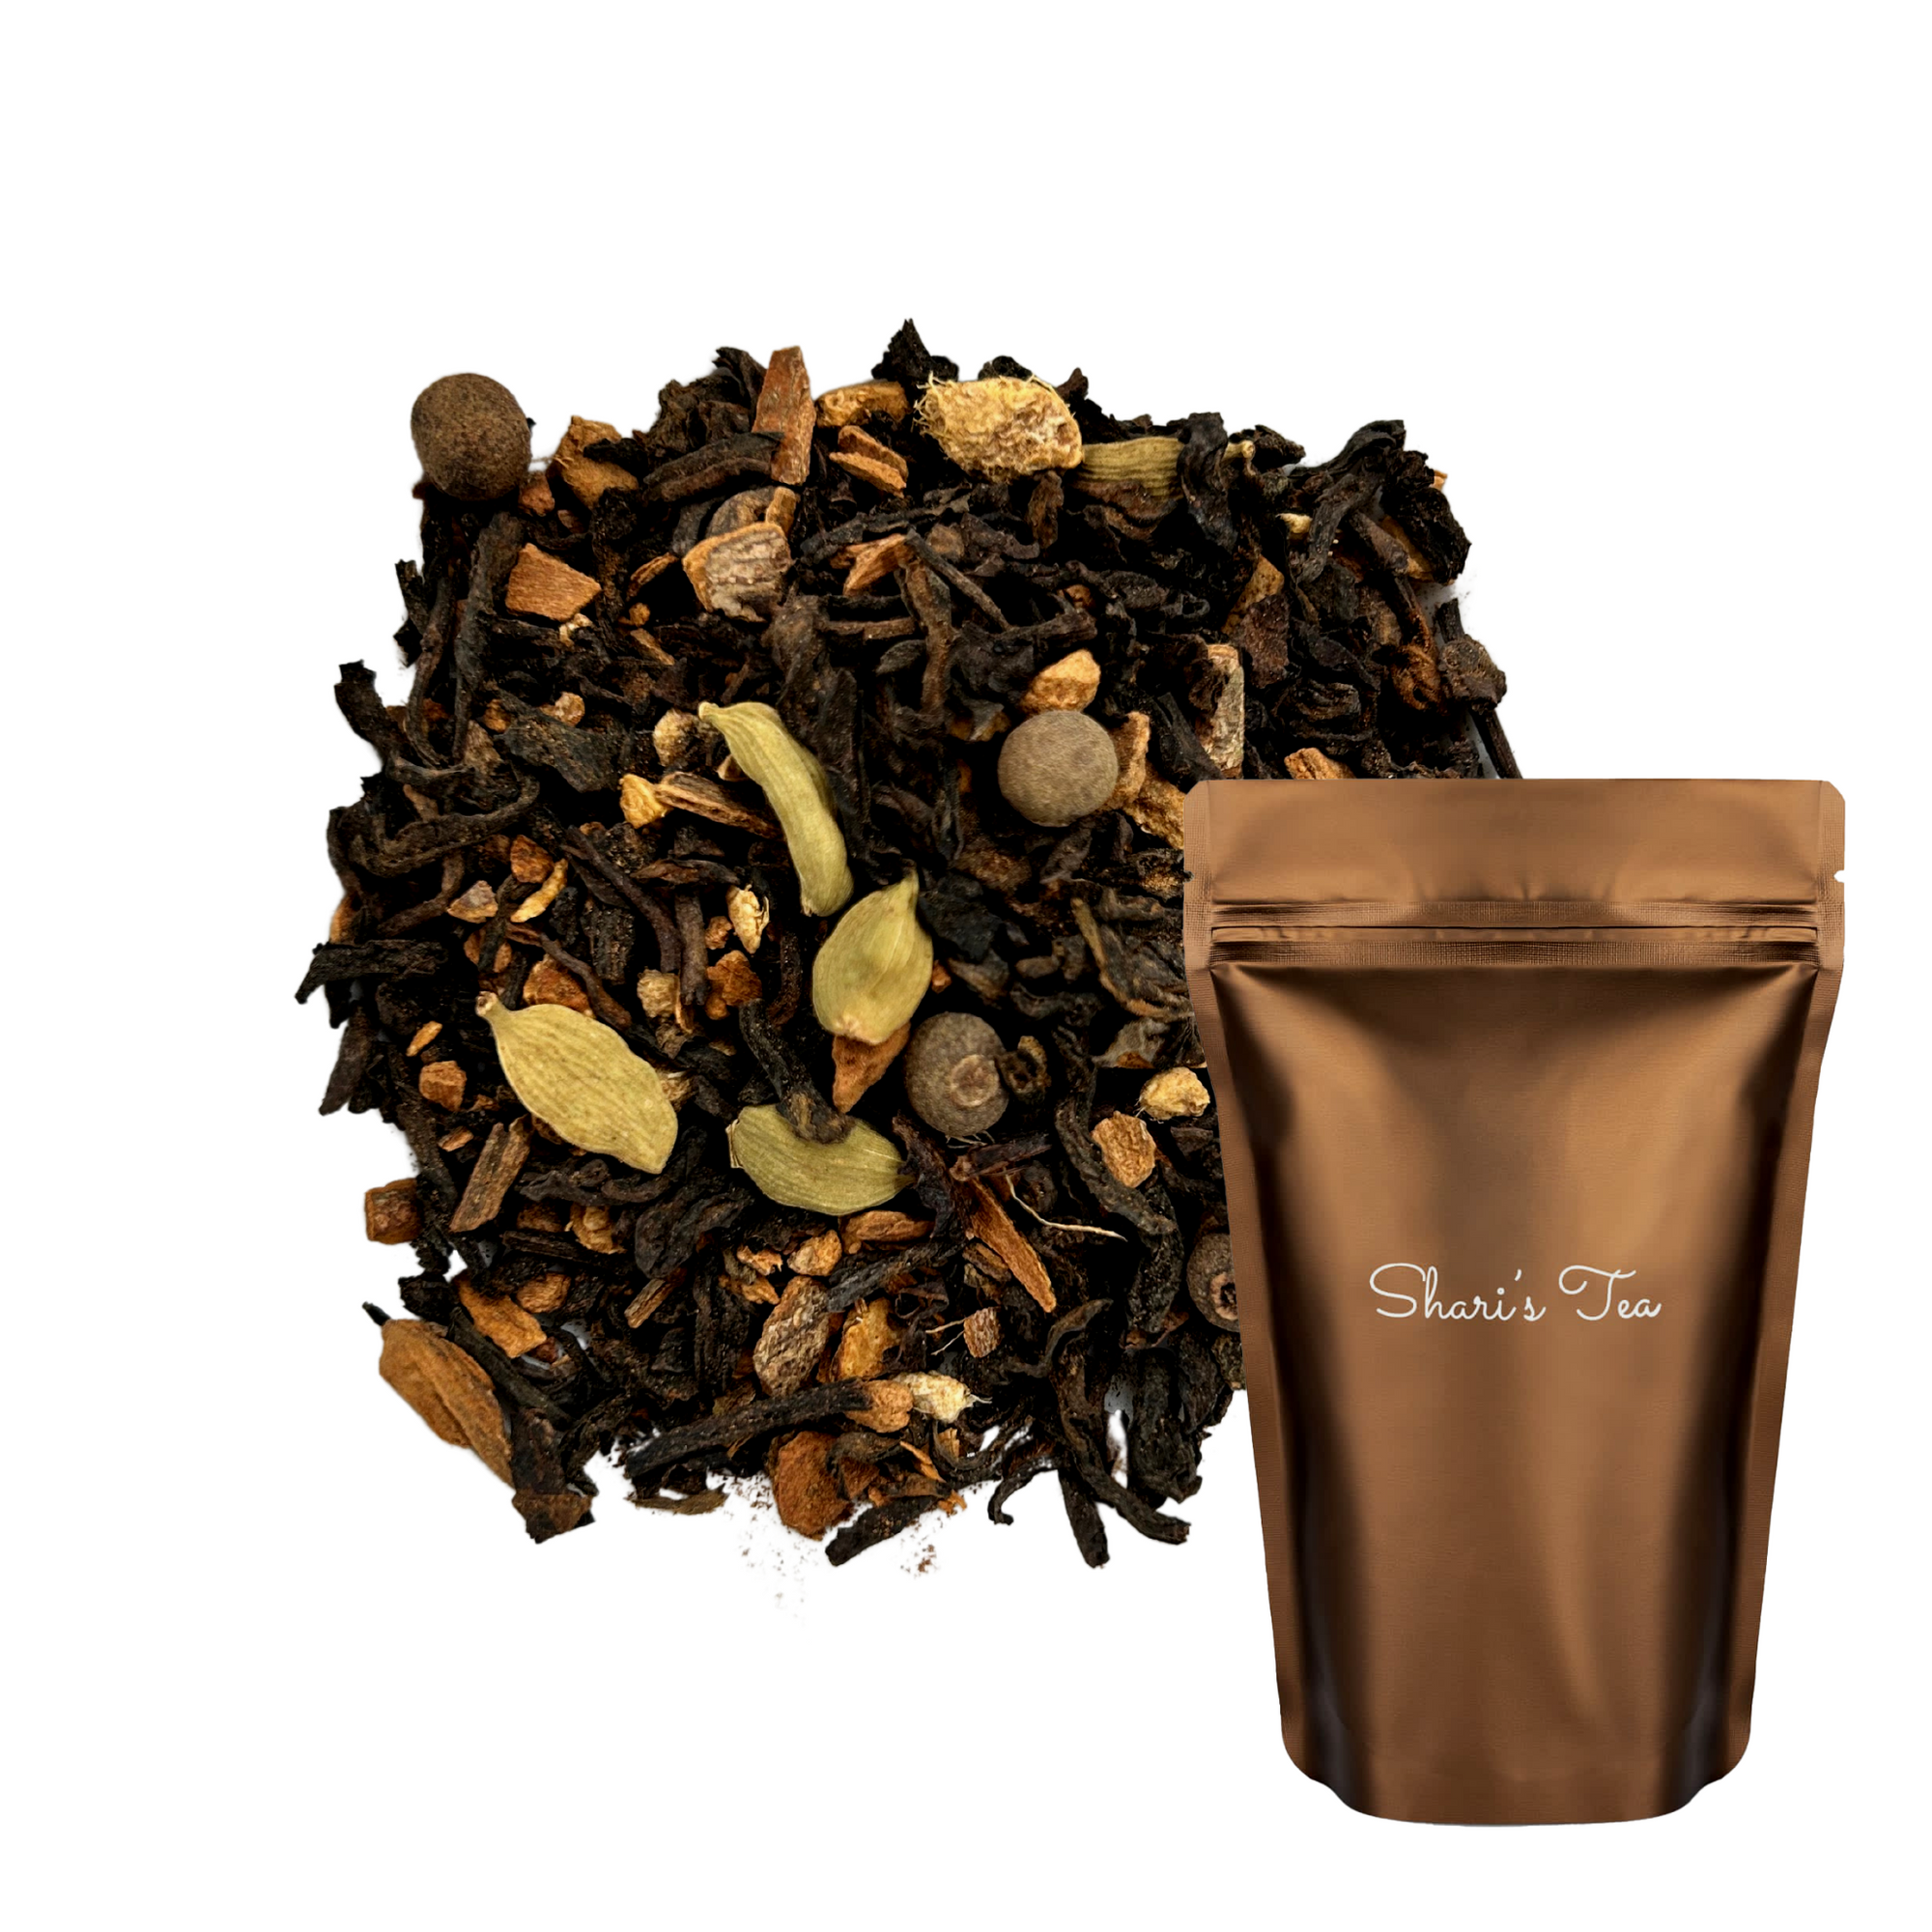 Premium Chai Pu-erh Black of Shari's Tea